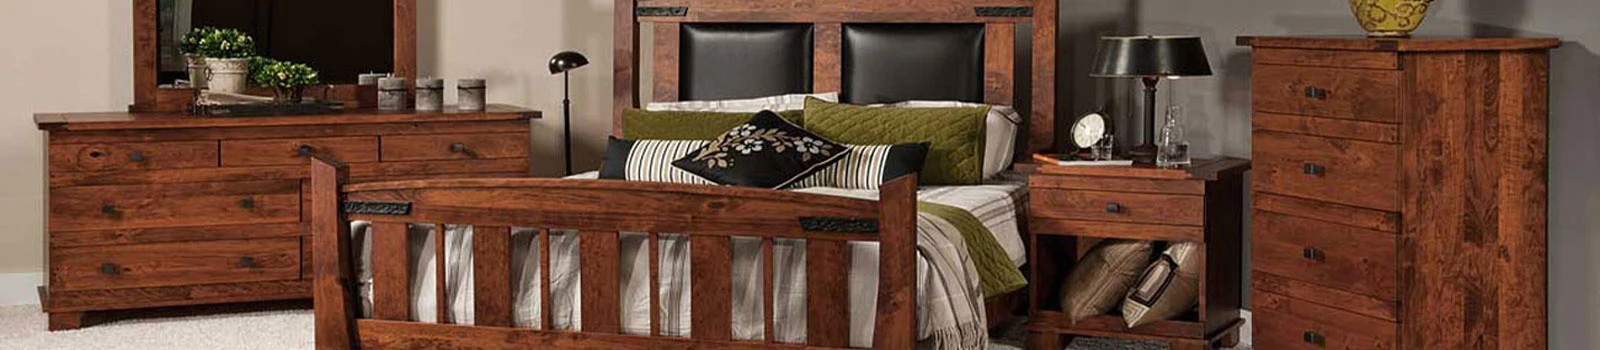 Discount amish bedroom furniture